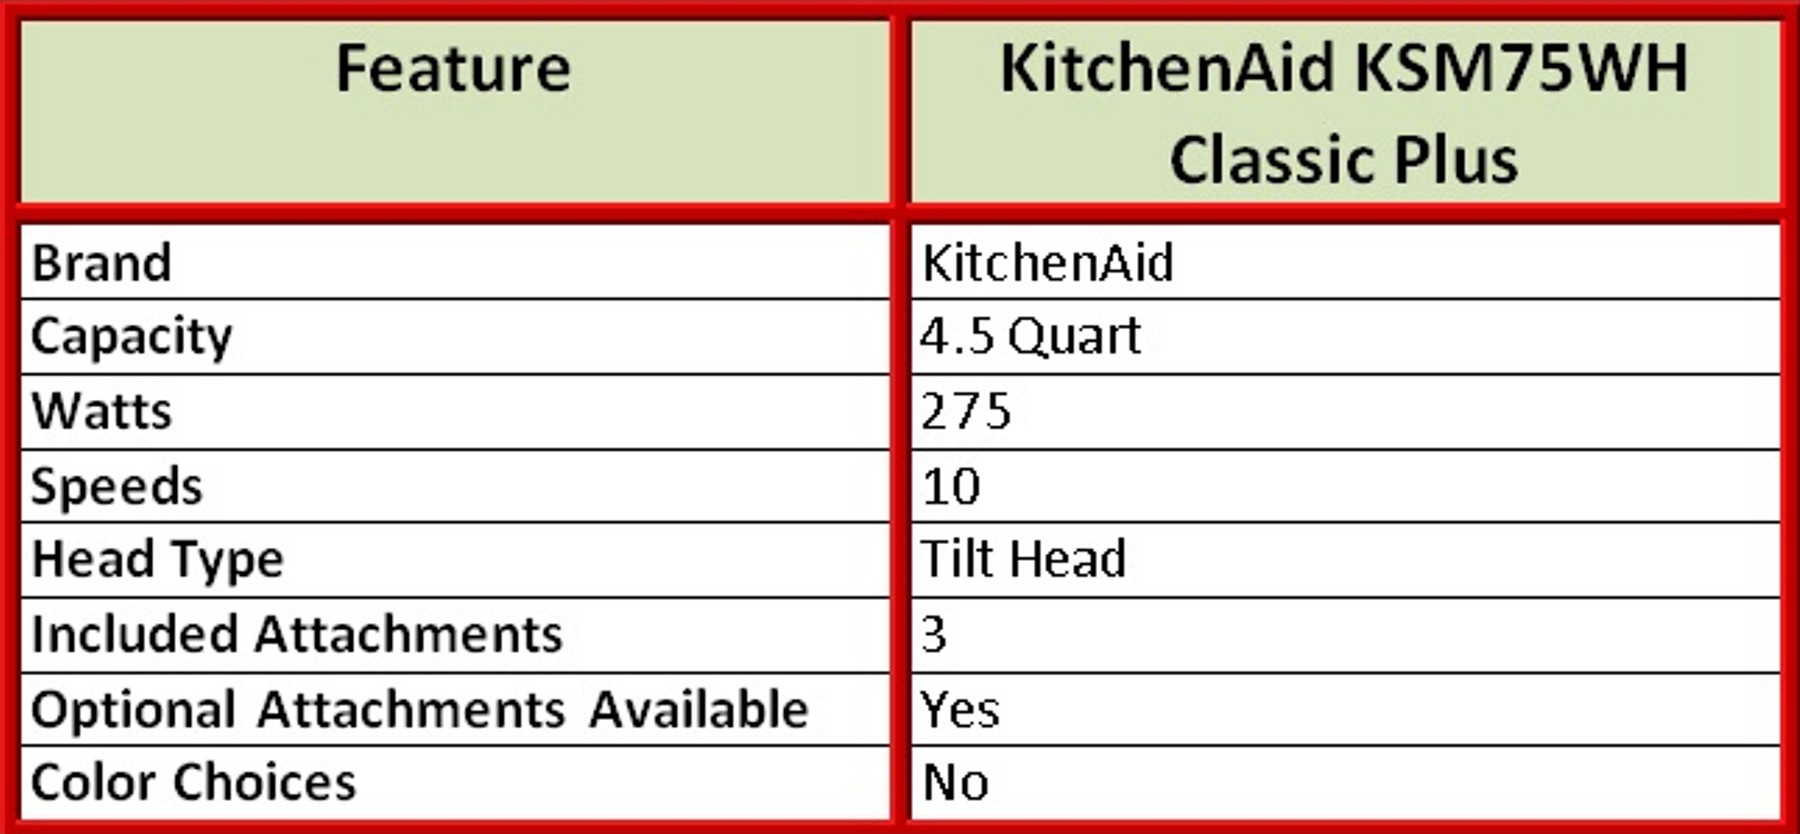 KitchenAid KSM75WH Classic Plus Stand Mixer Features